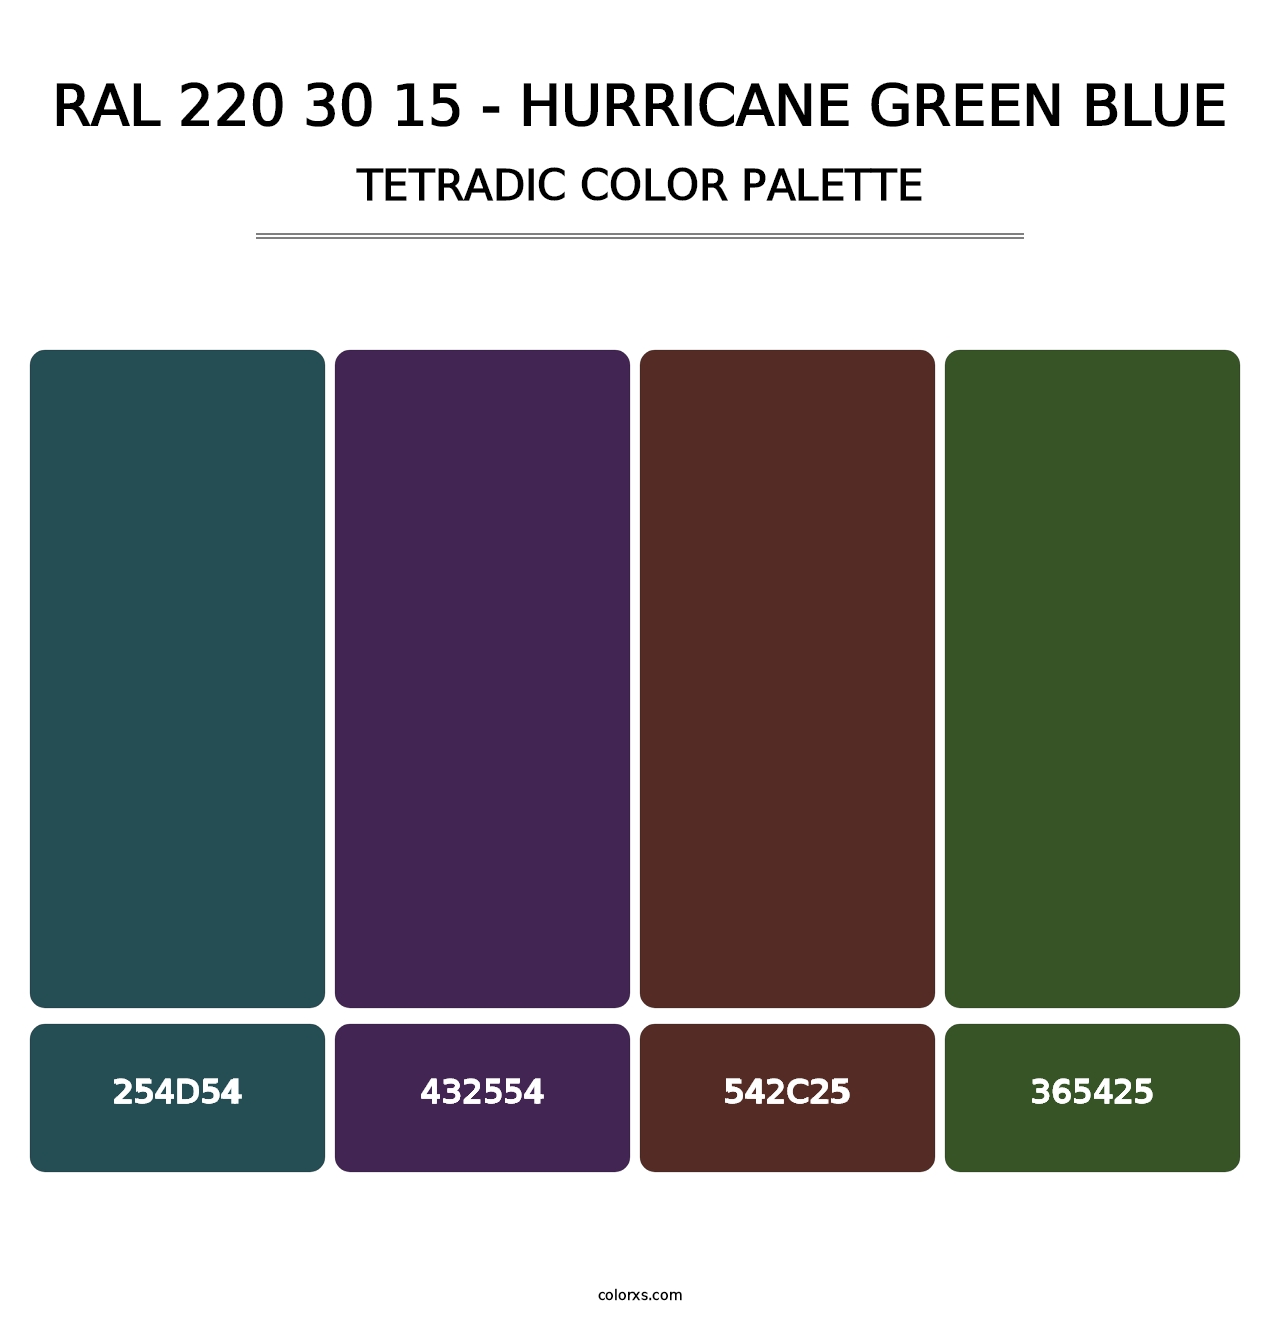 RAL 220 30 15 - Hurricane Green Blue - Tetradic Color Palette